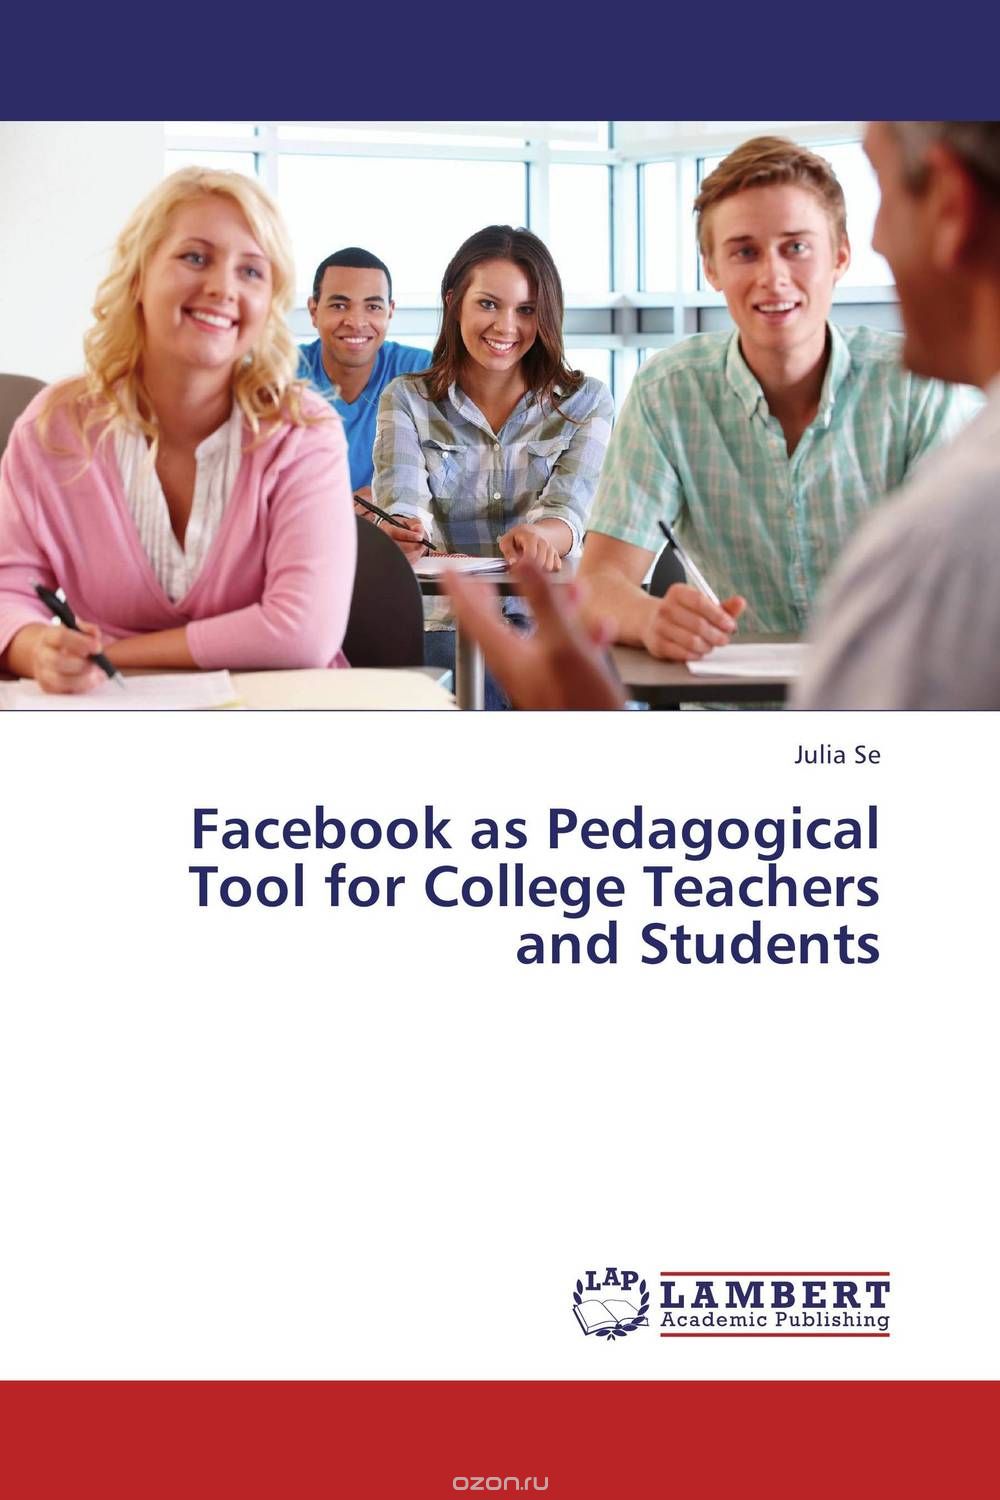 Скачать книгу "Facebook as Pedagogical Tool for College Teachers and Students"